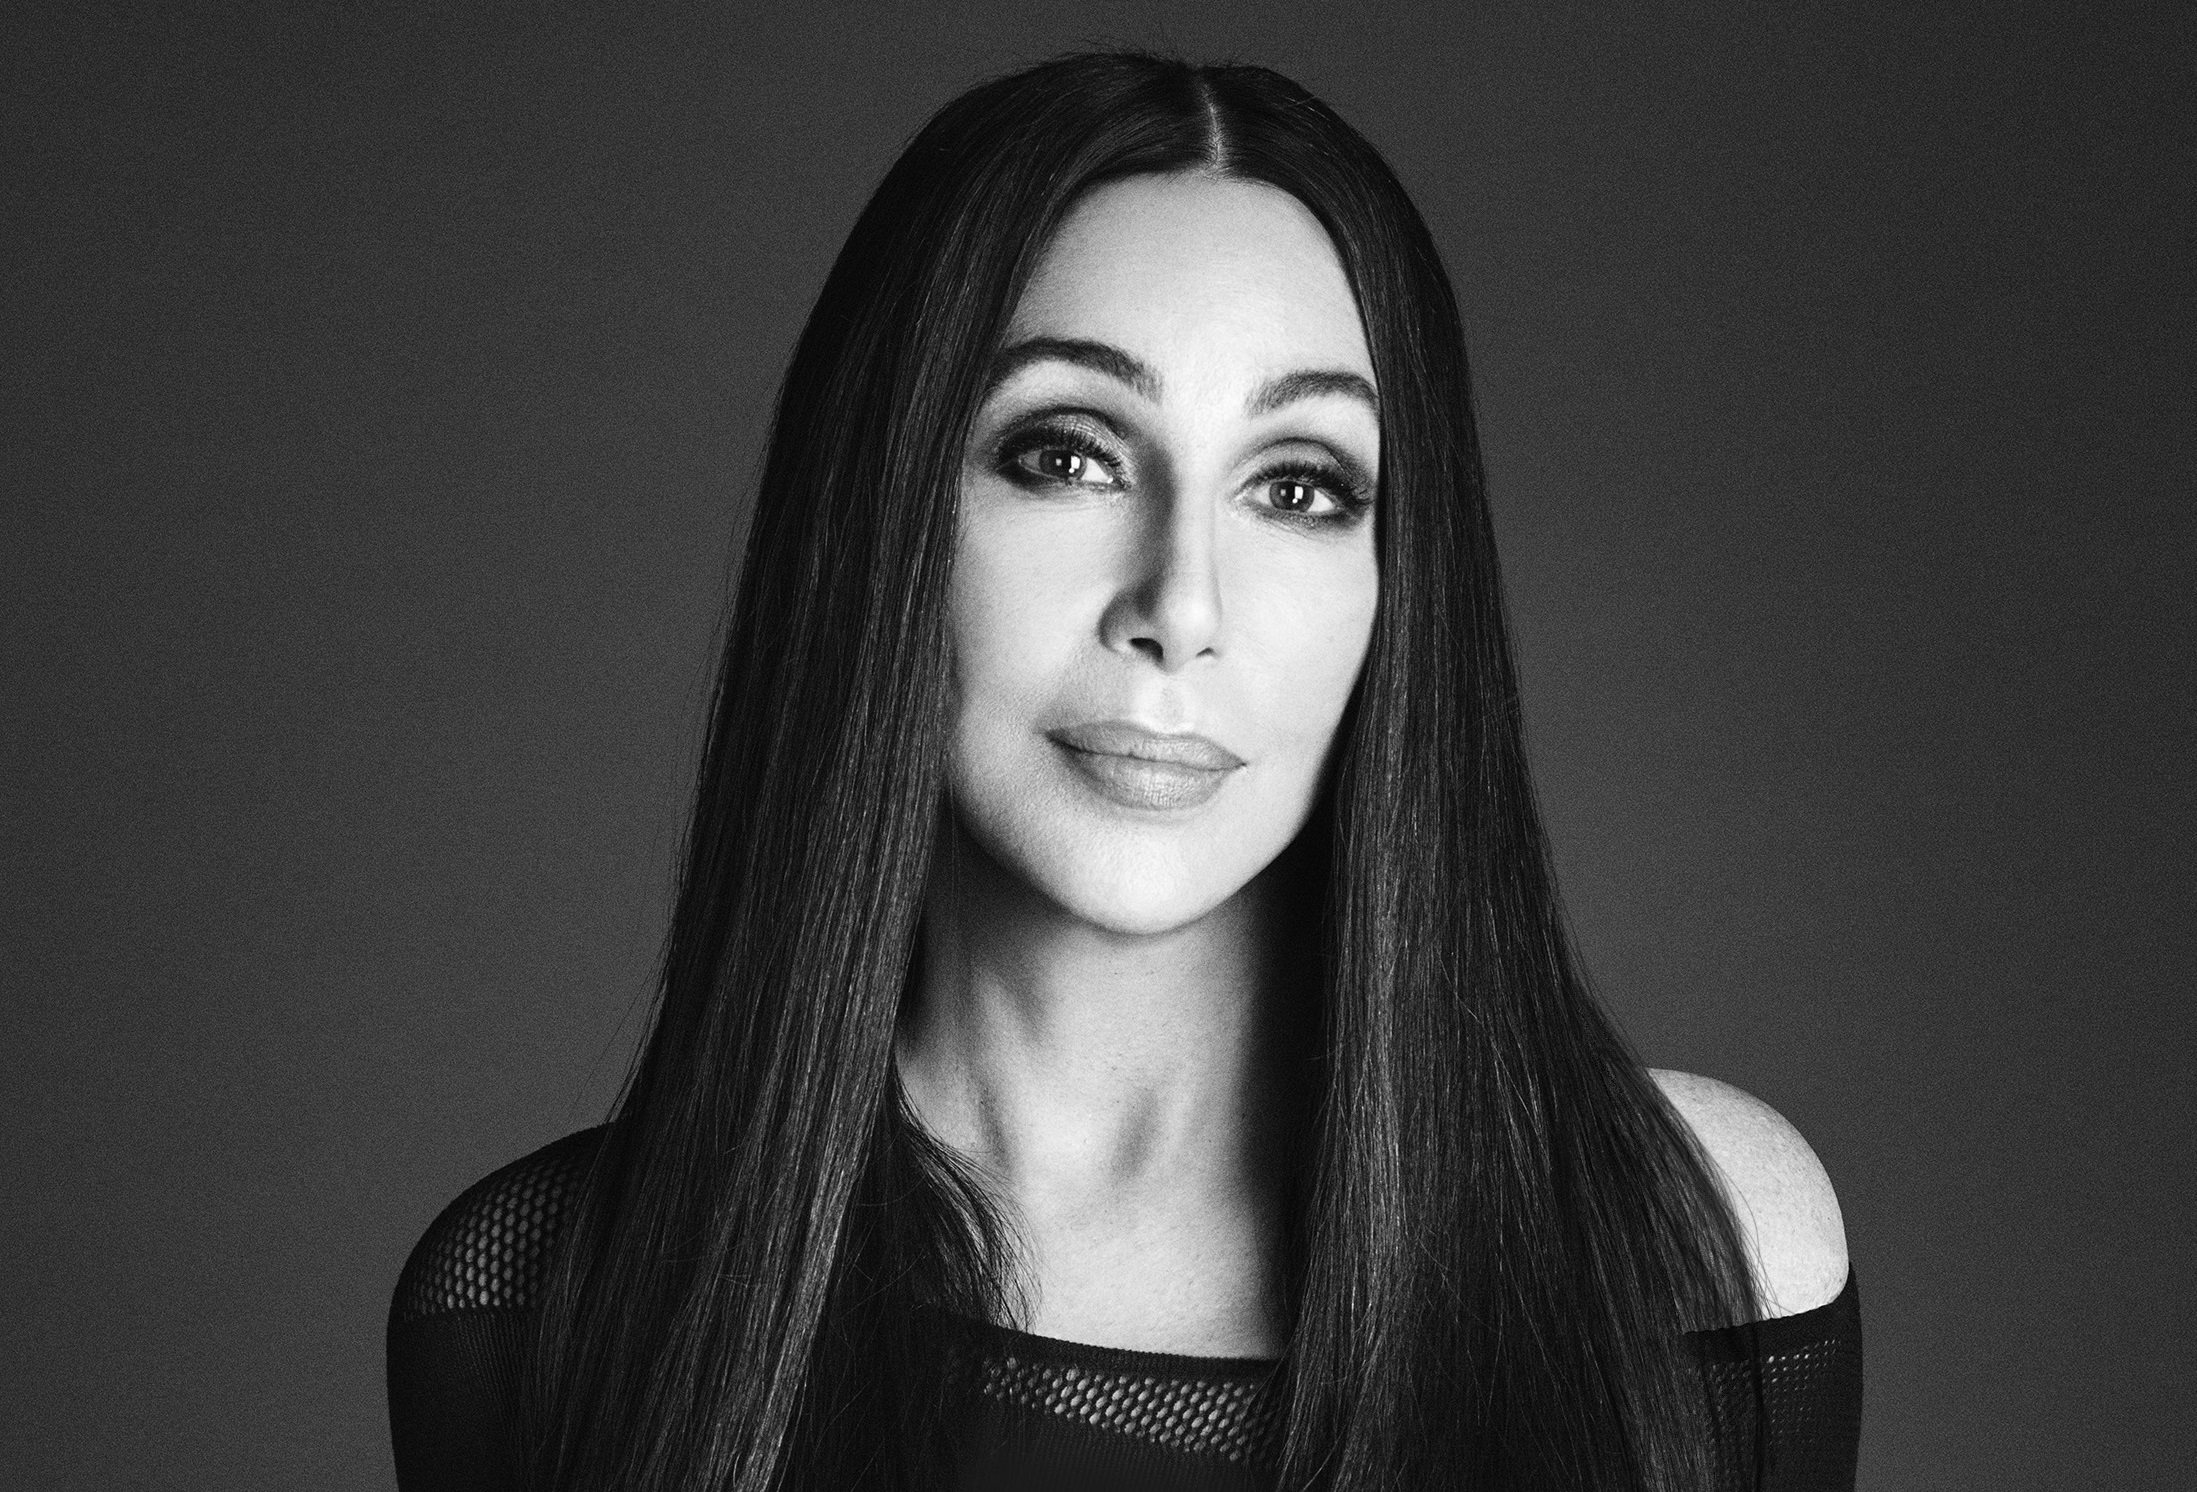 Black and white portrait photo of Cher